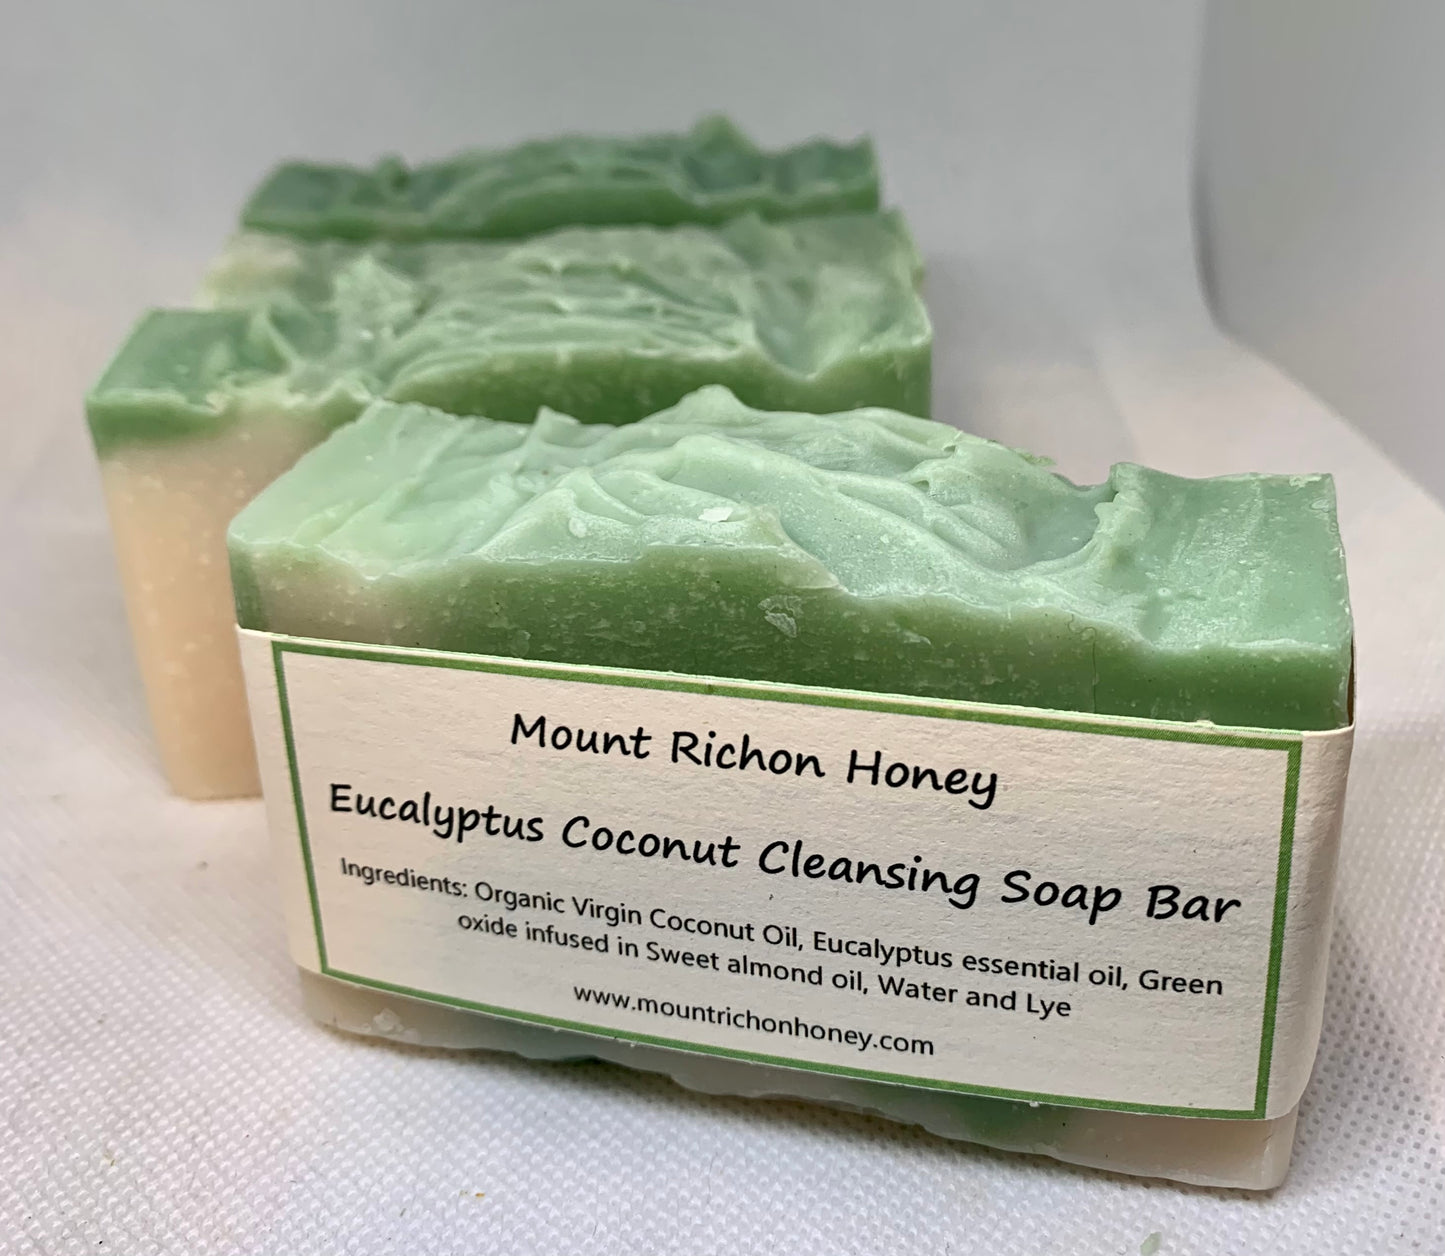 Eucalyptus Coconut Cleansing Soap Bar